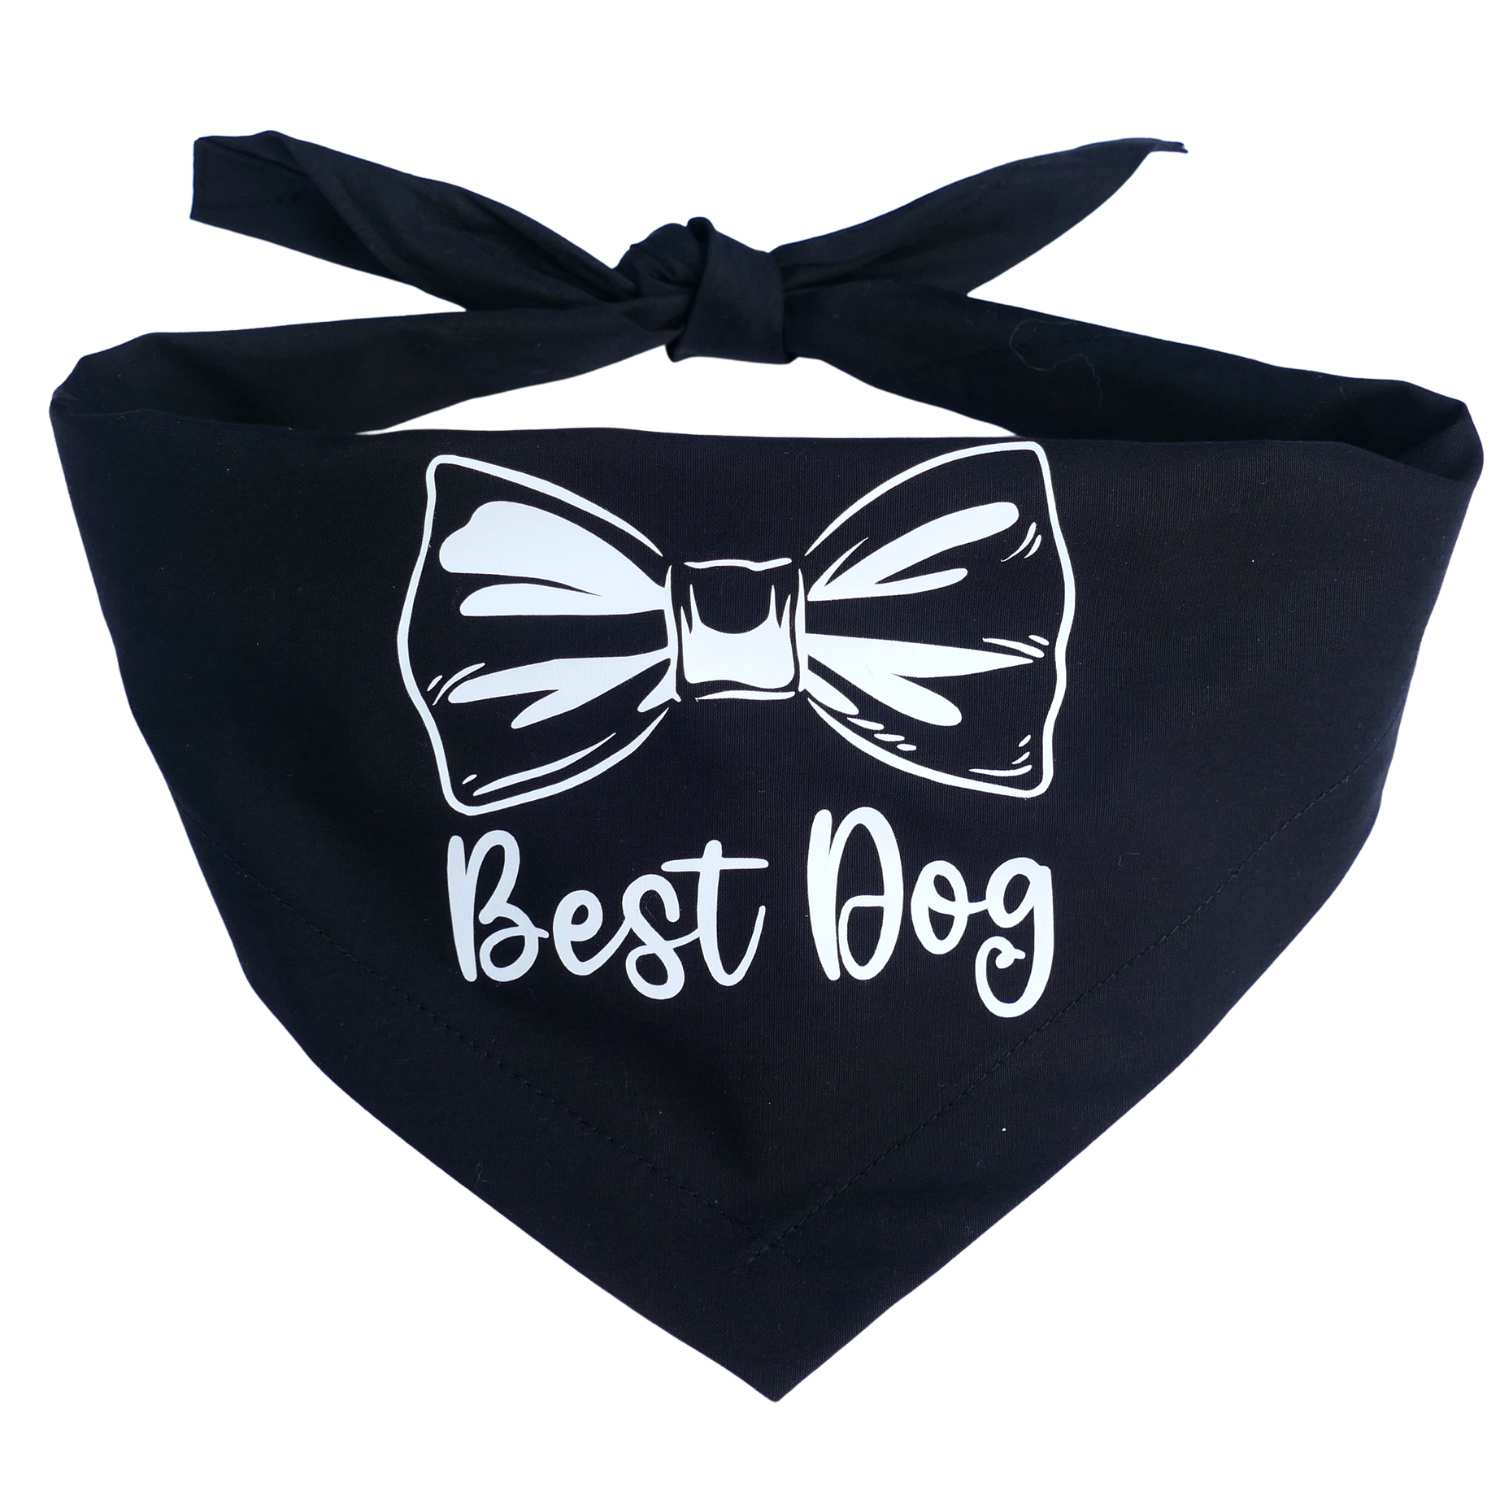 Best Dog Printed Wedding bandana (Black)